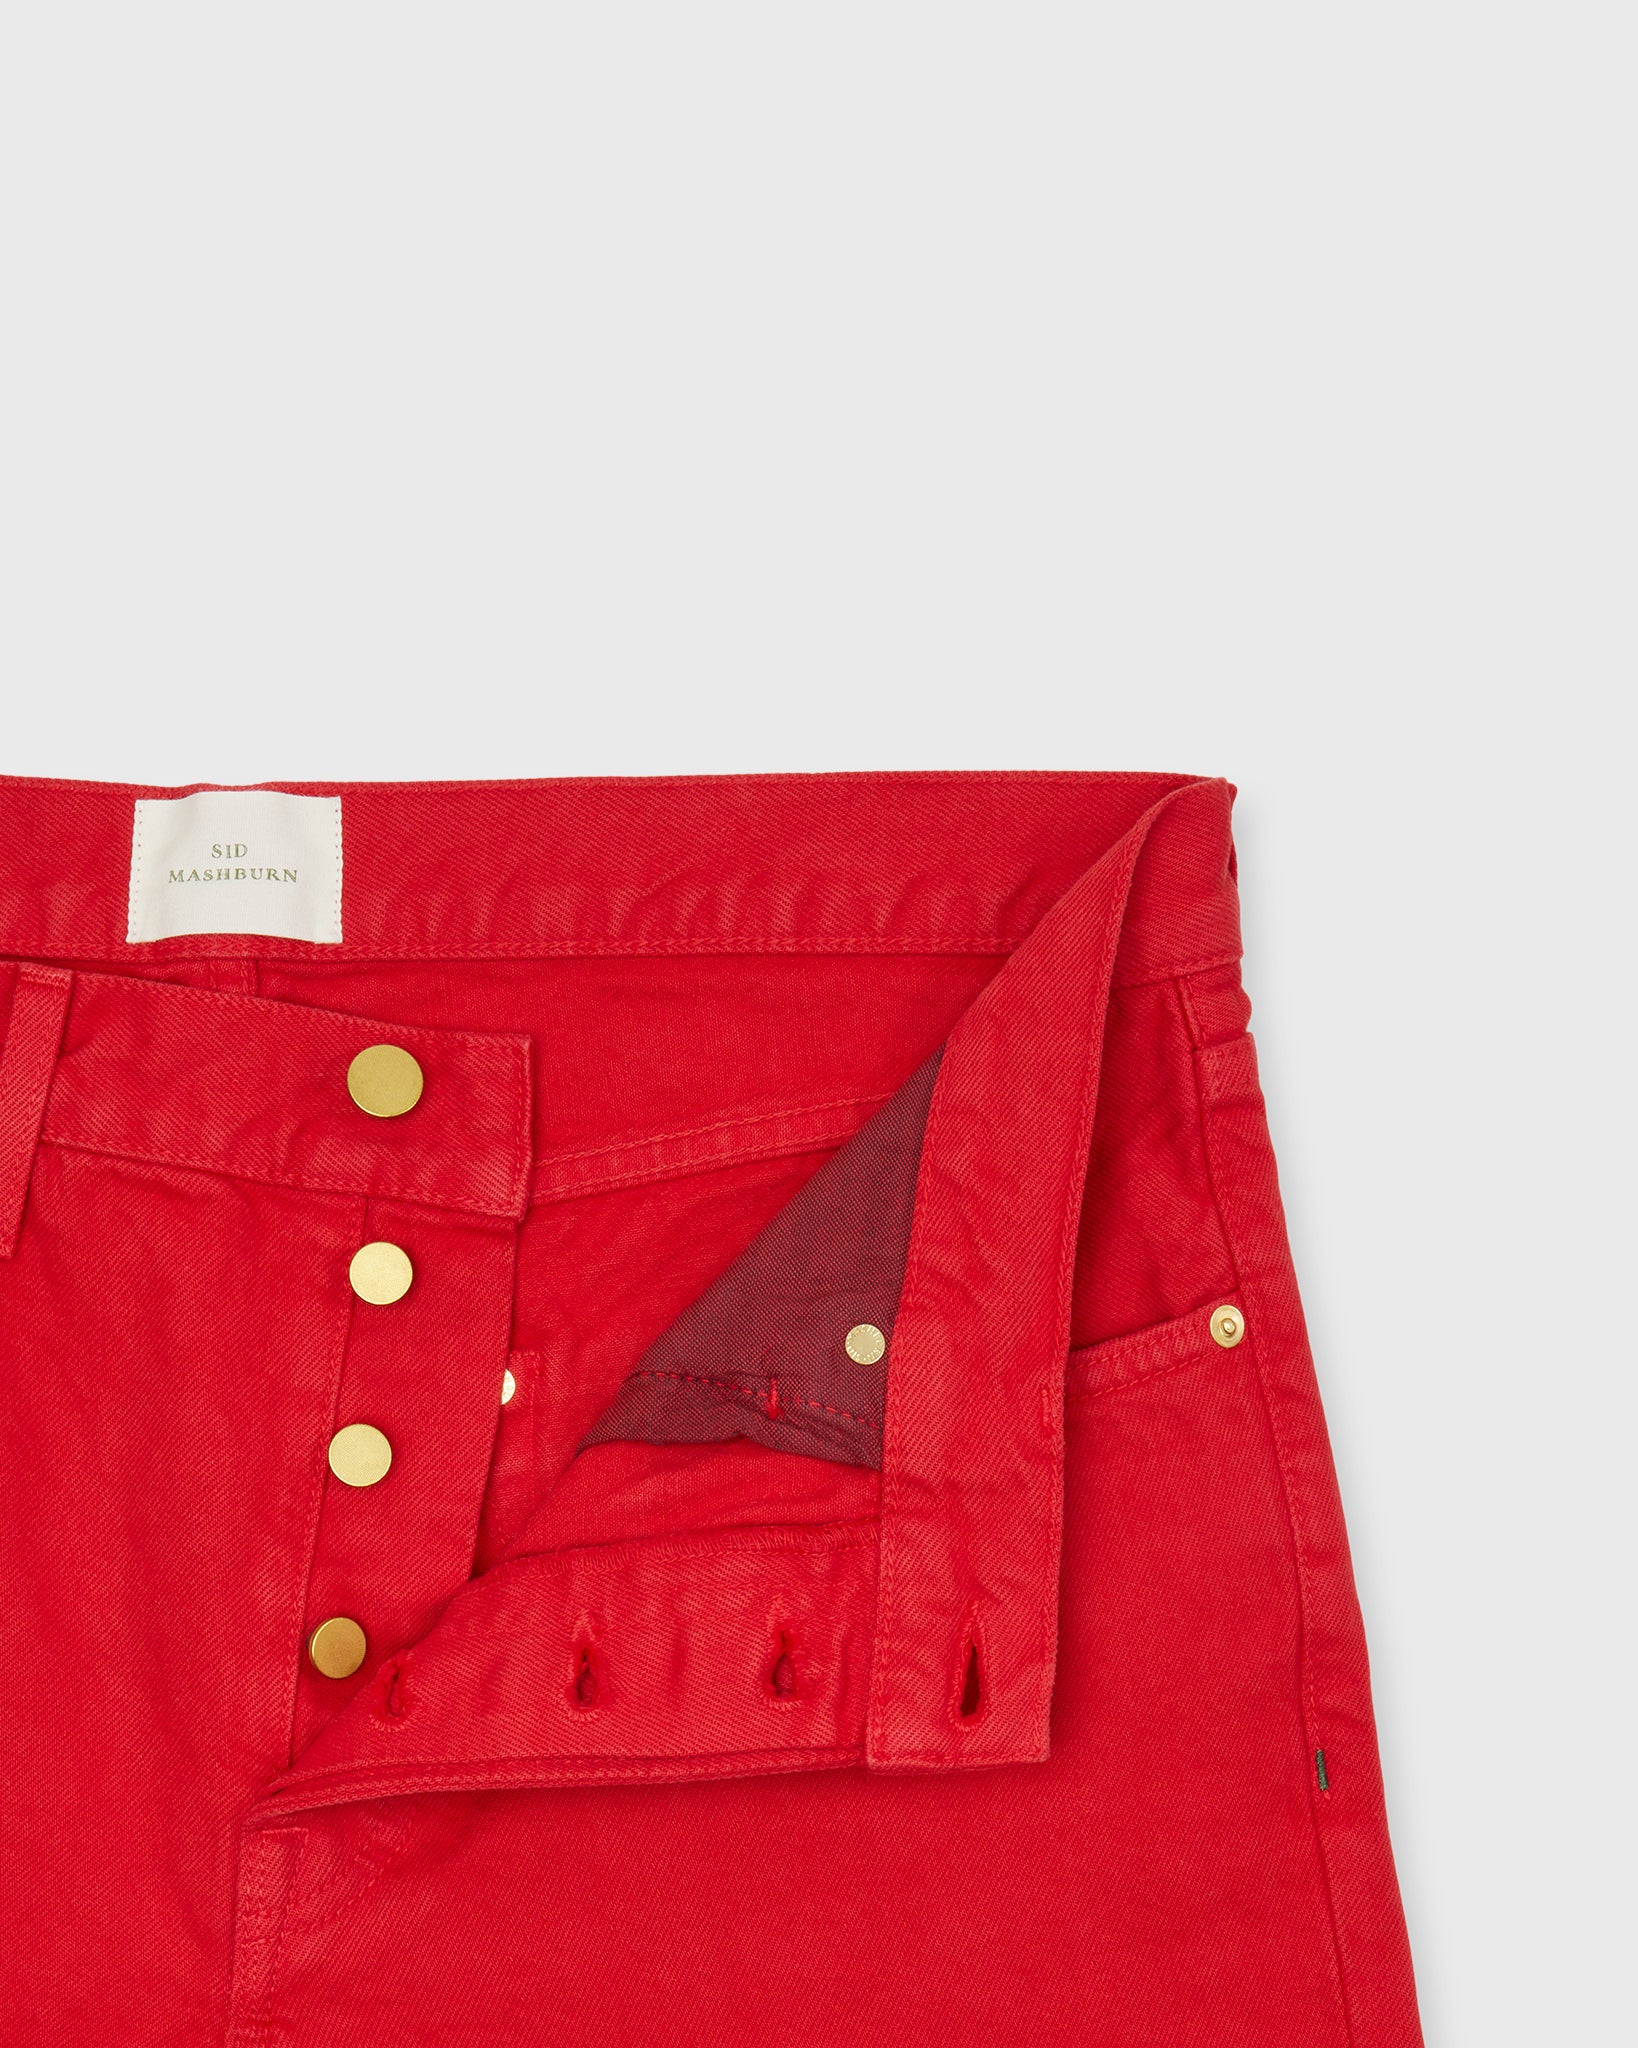 Slim Straight Jean in Red Garment-Dyed Denim